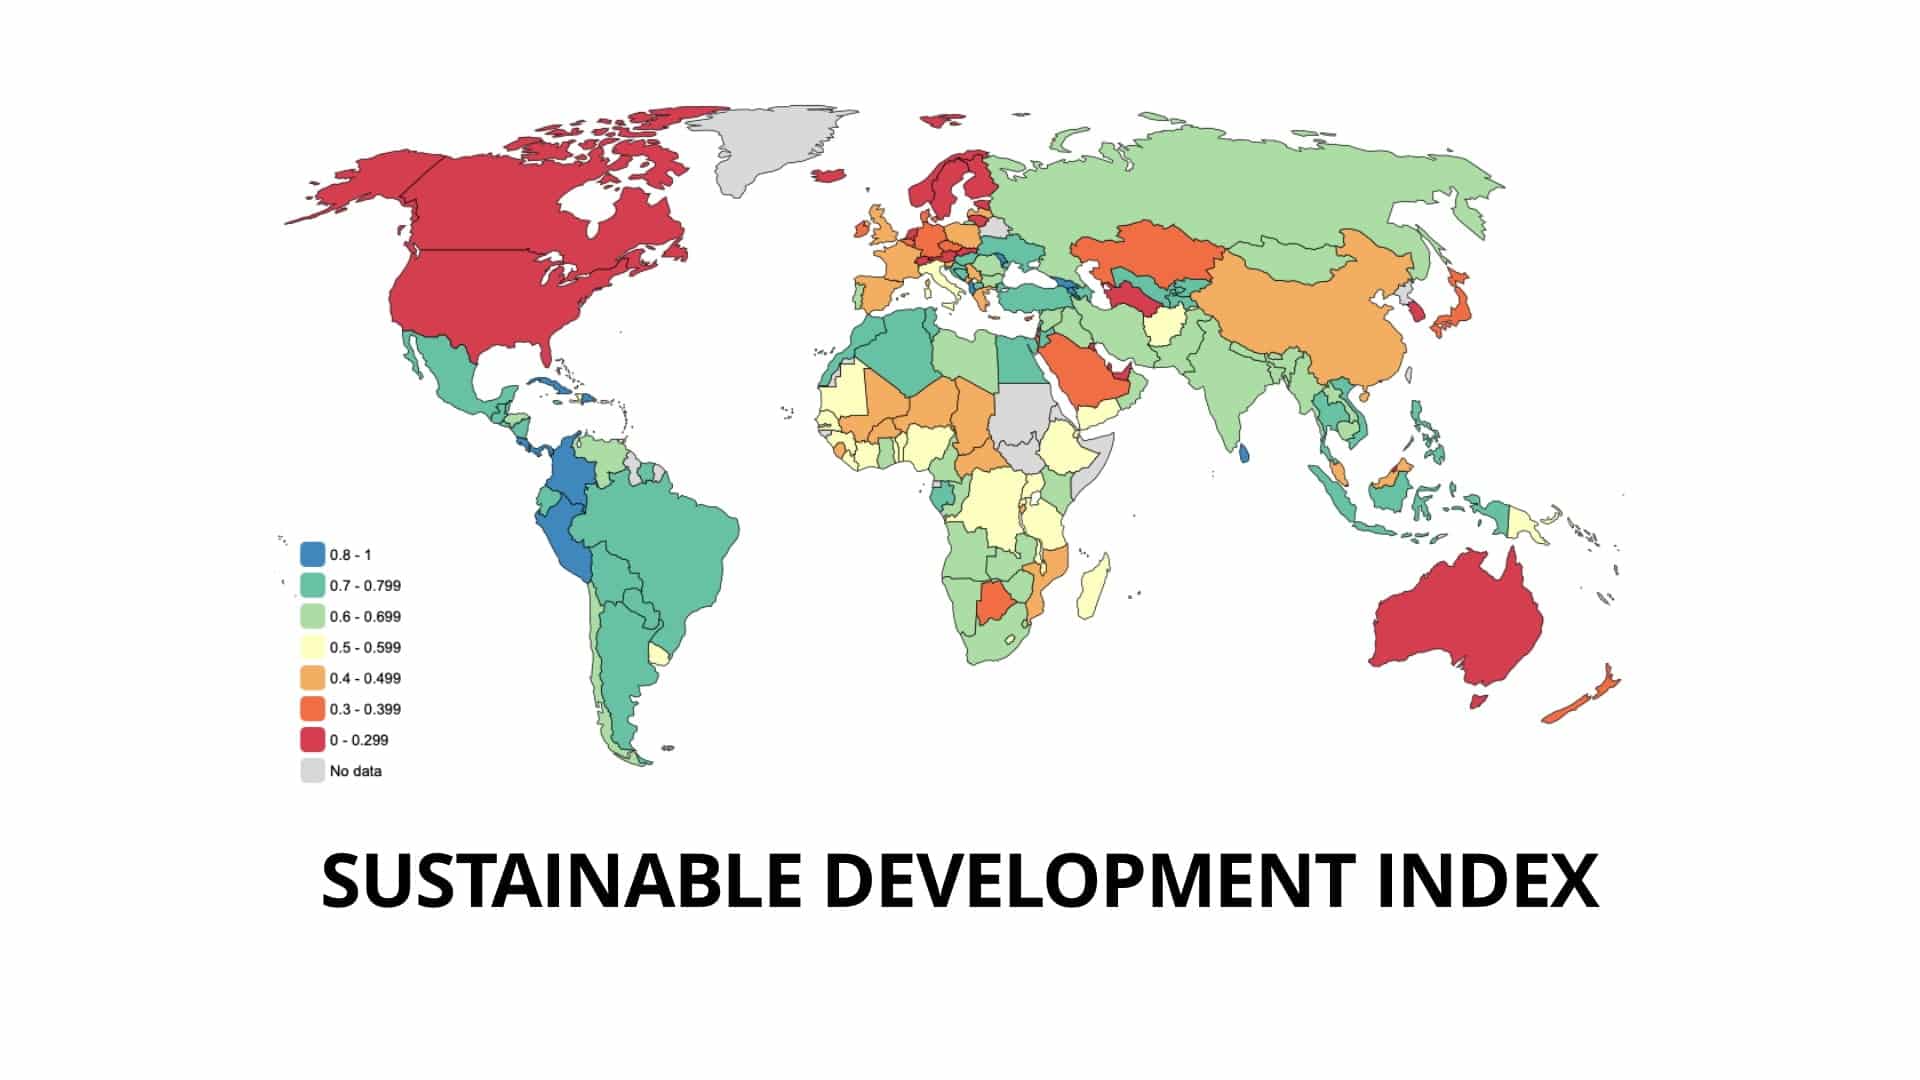 thefuture, Resurs, Sustainable Development Index